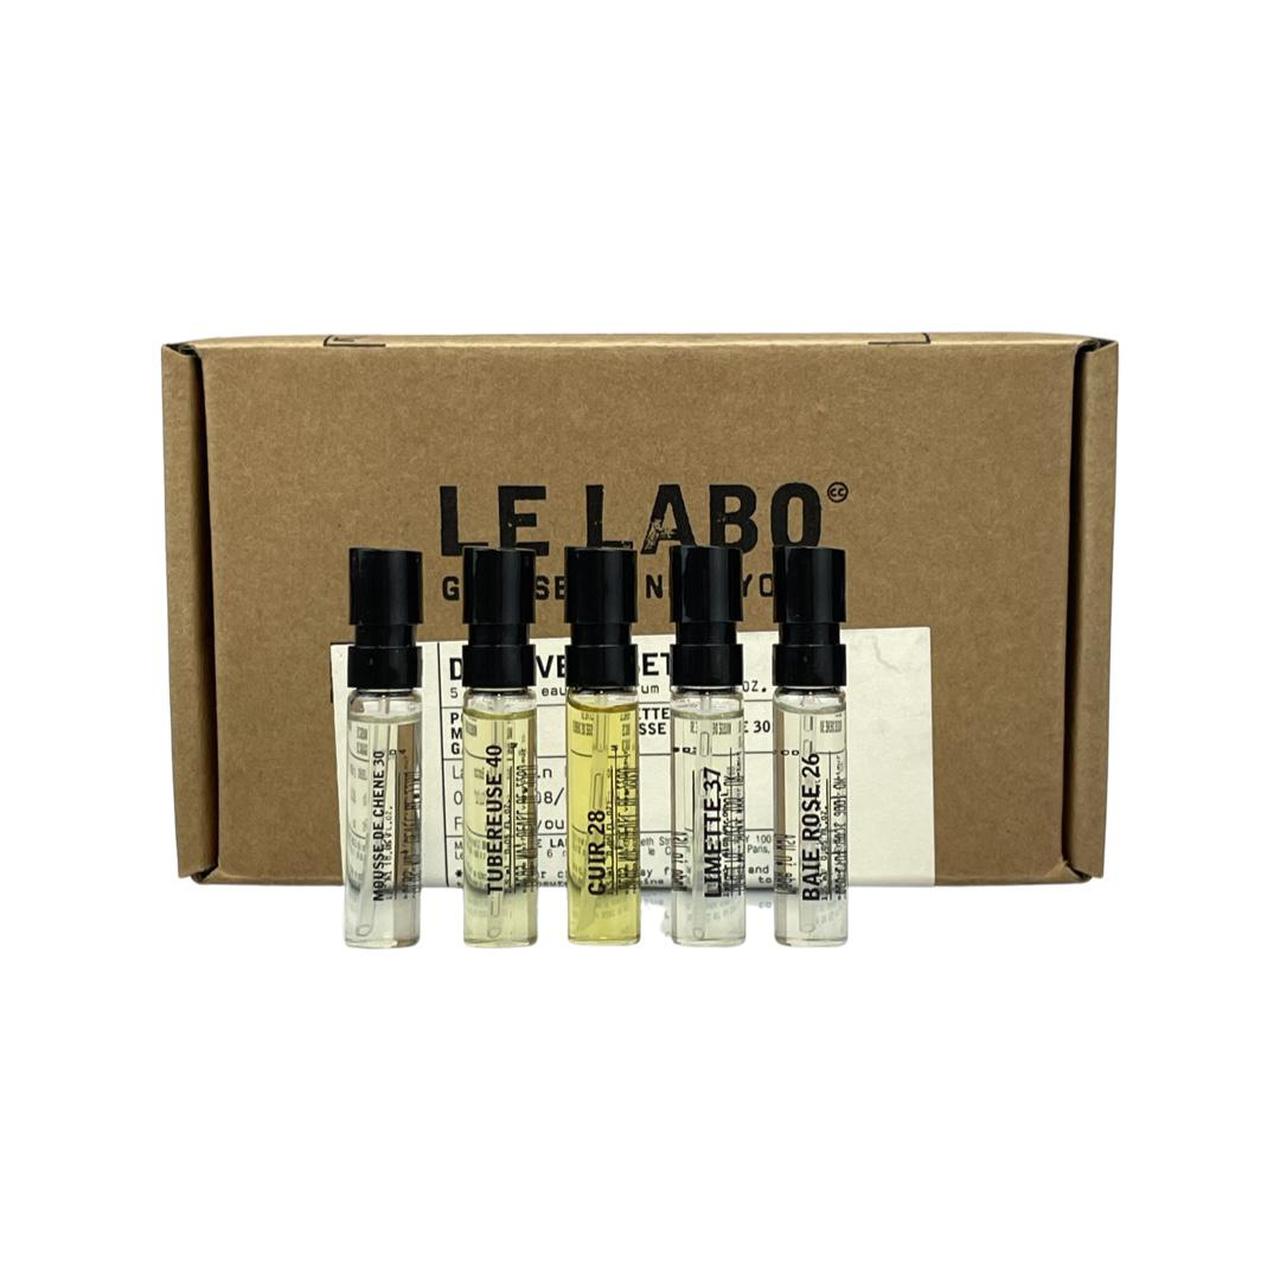 Le Labo CITY EXCLUSIVES x 5 Trial Vials.05oz/1.5mL... Depop